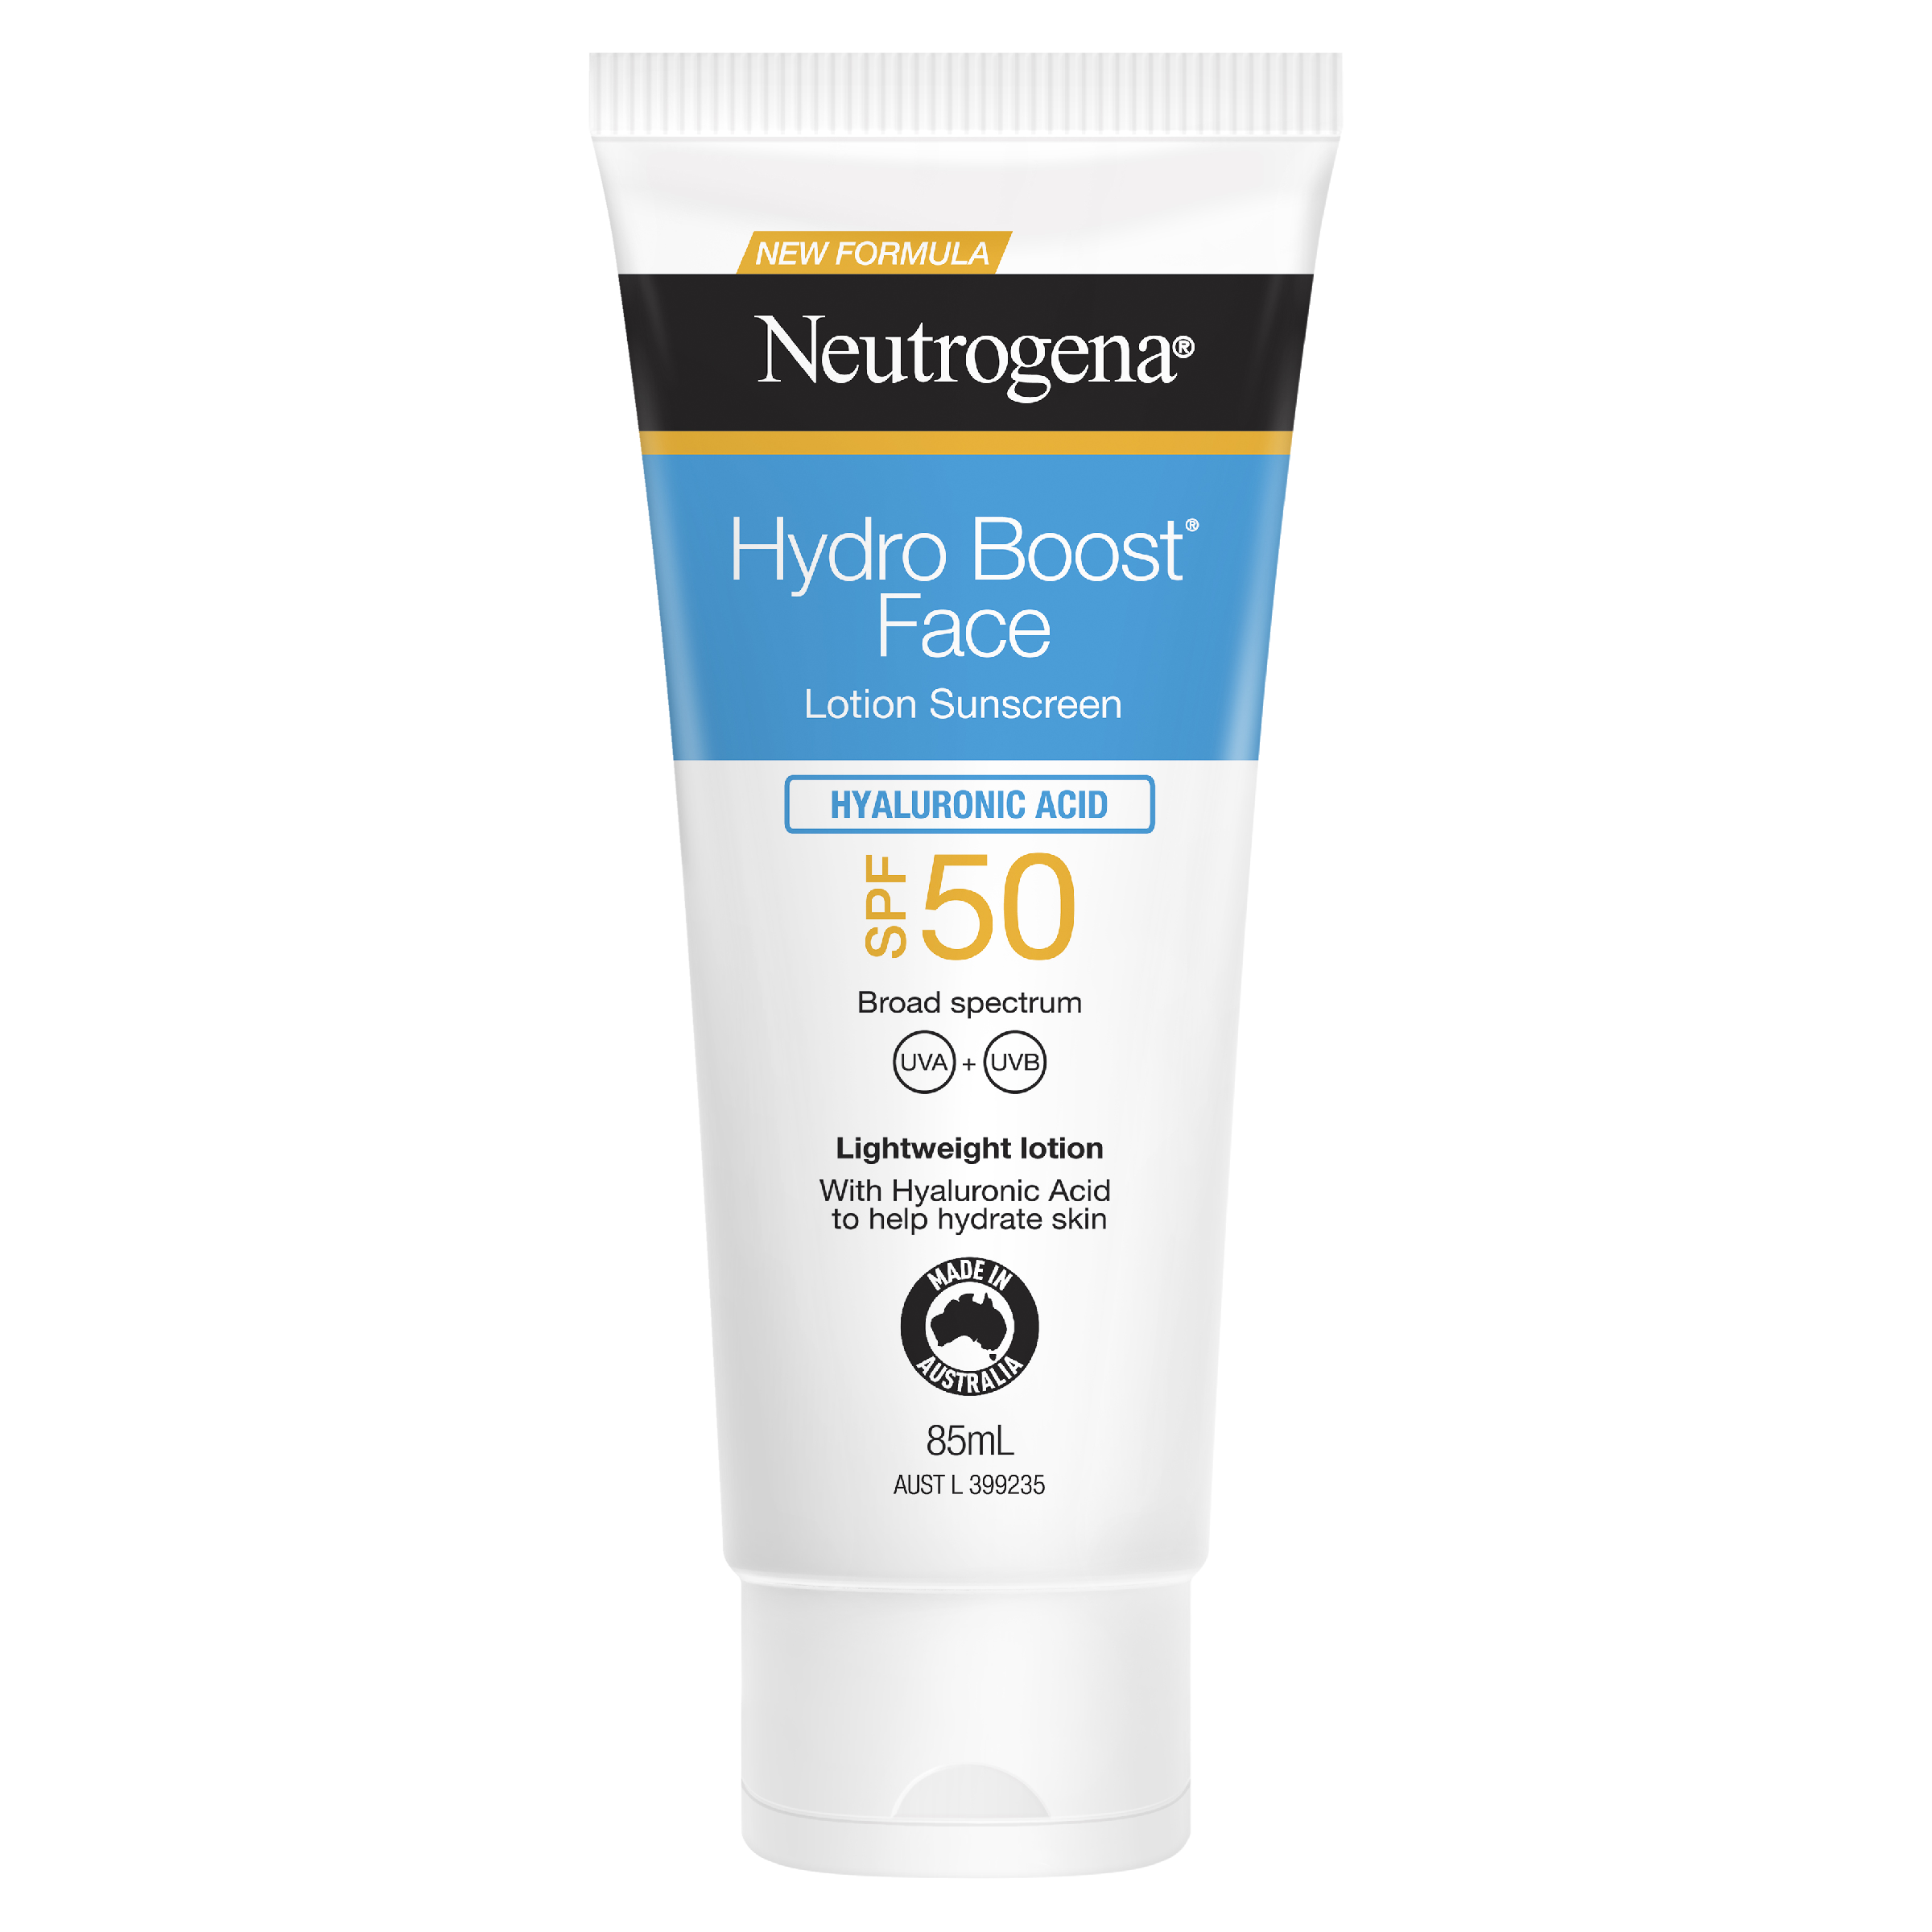 Neutrogena Hydro Boost Face Lotion Sunscreen SPF 50